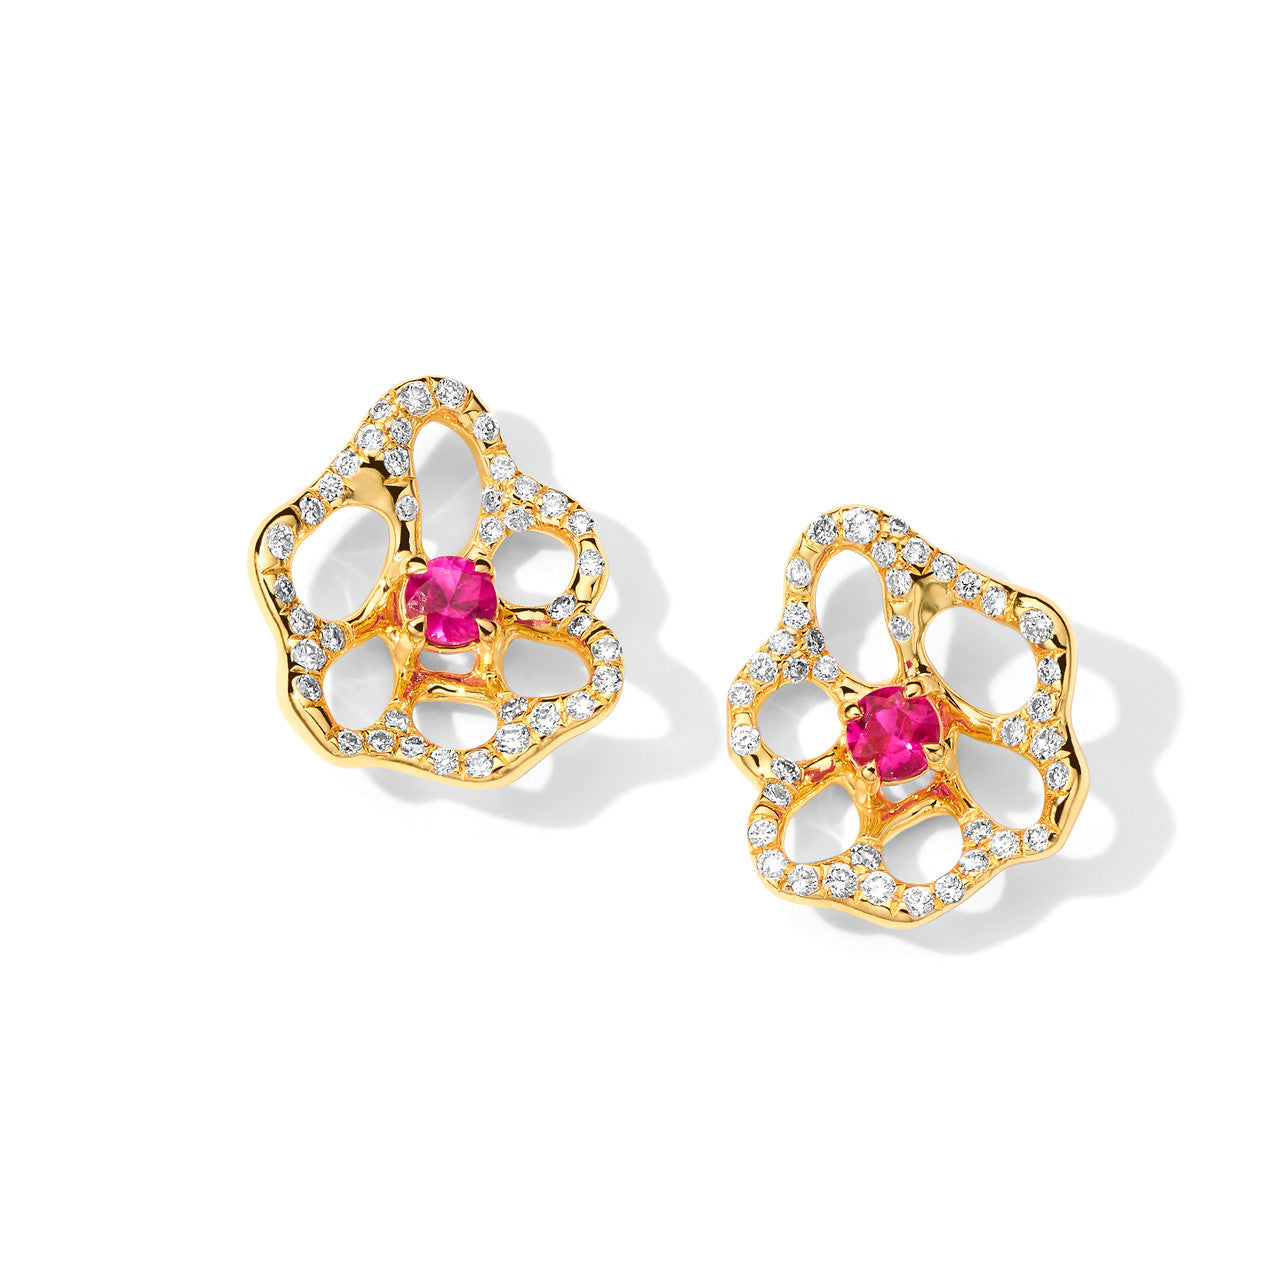 Stardust Flora Mini Stud Earrings in Pink Sapphire with Diamonds